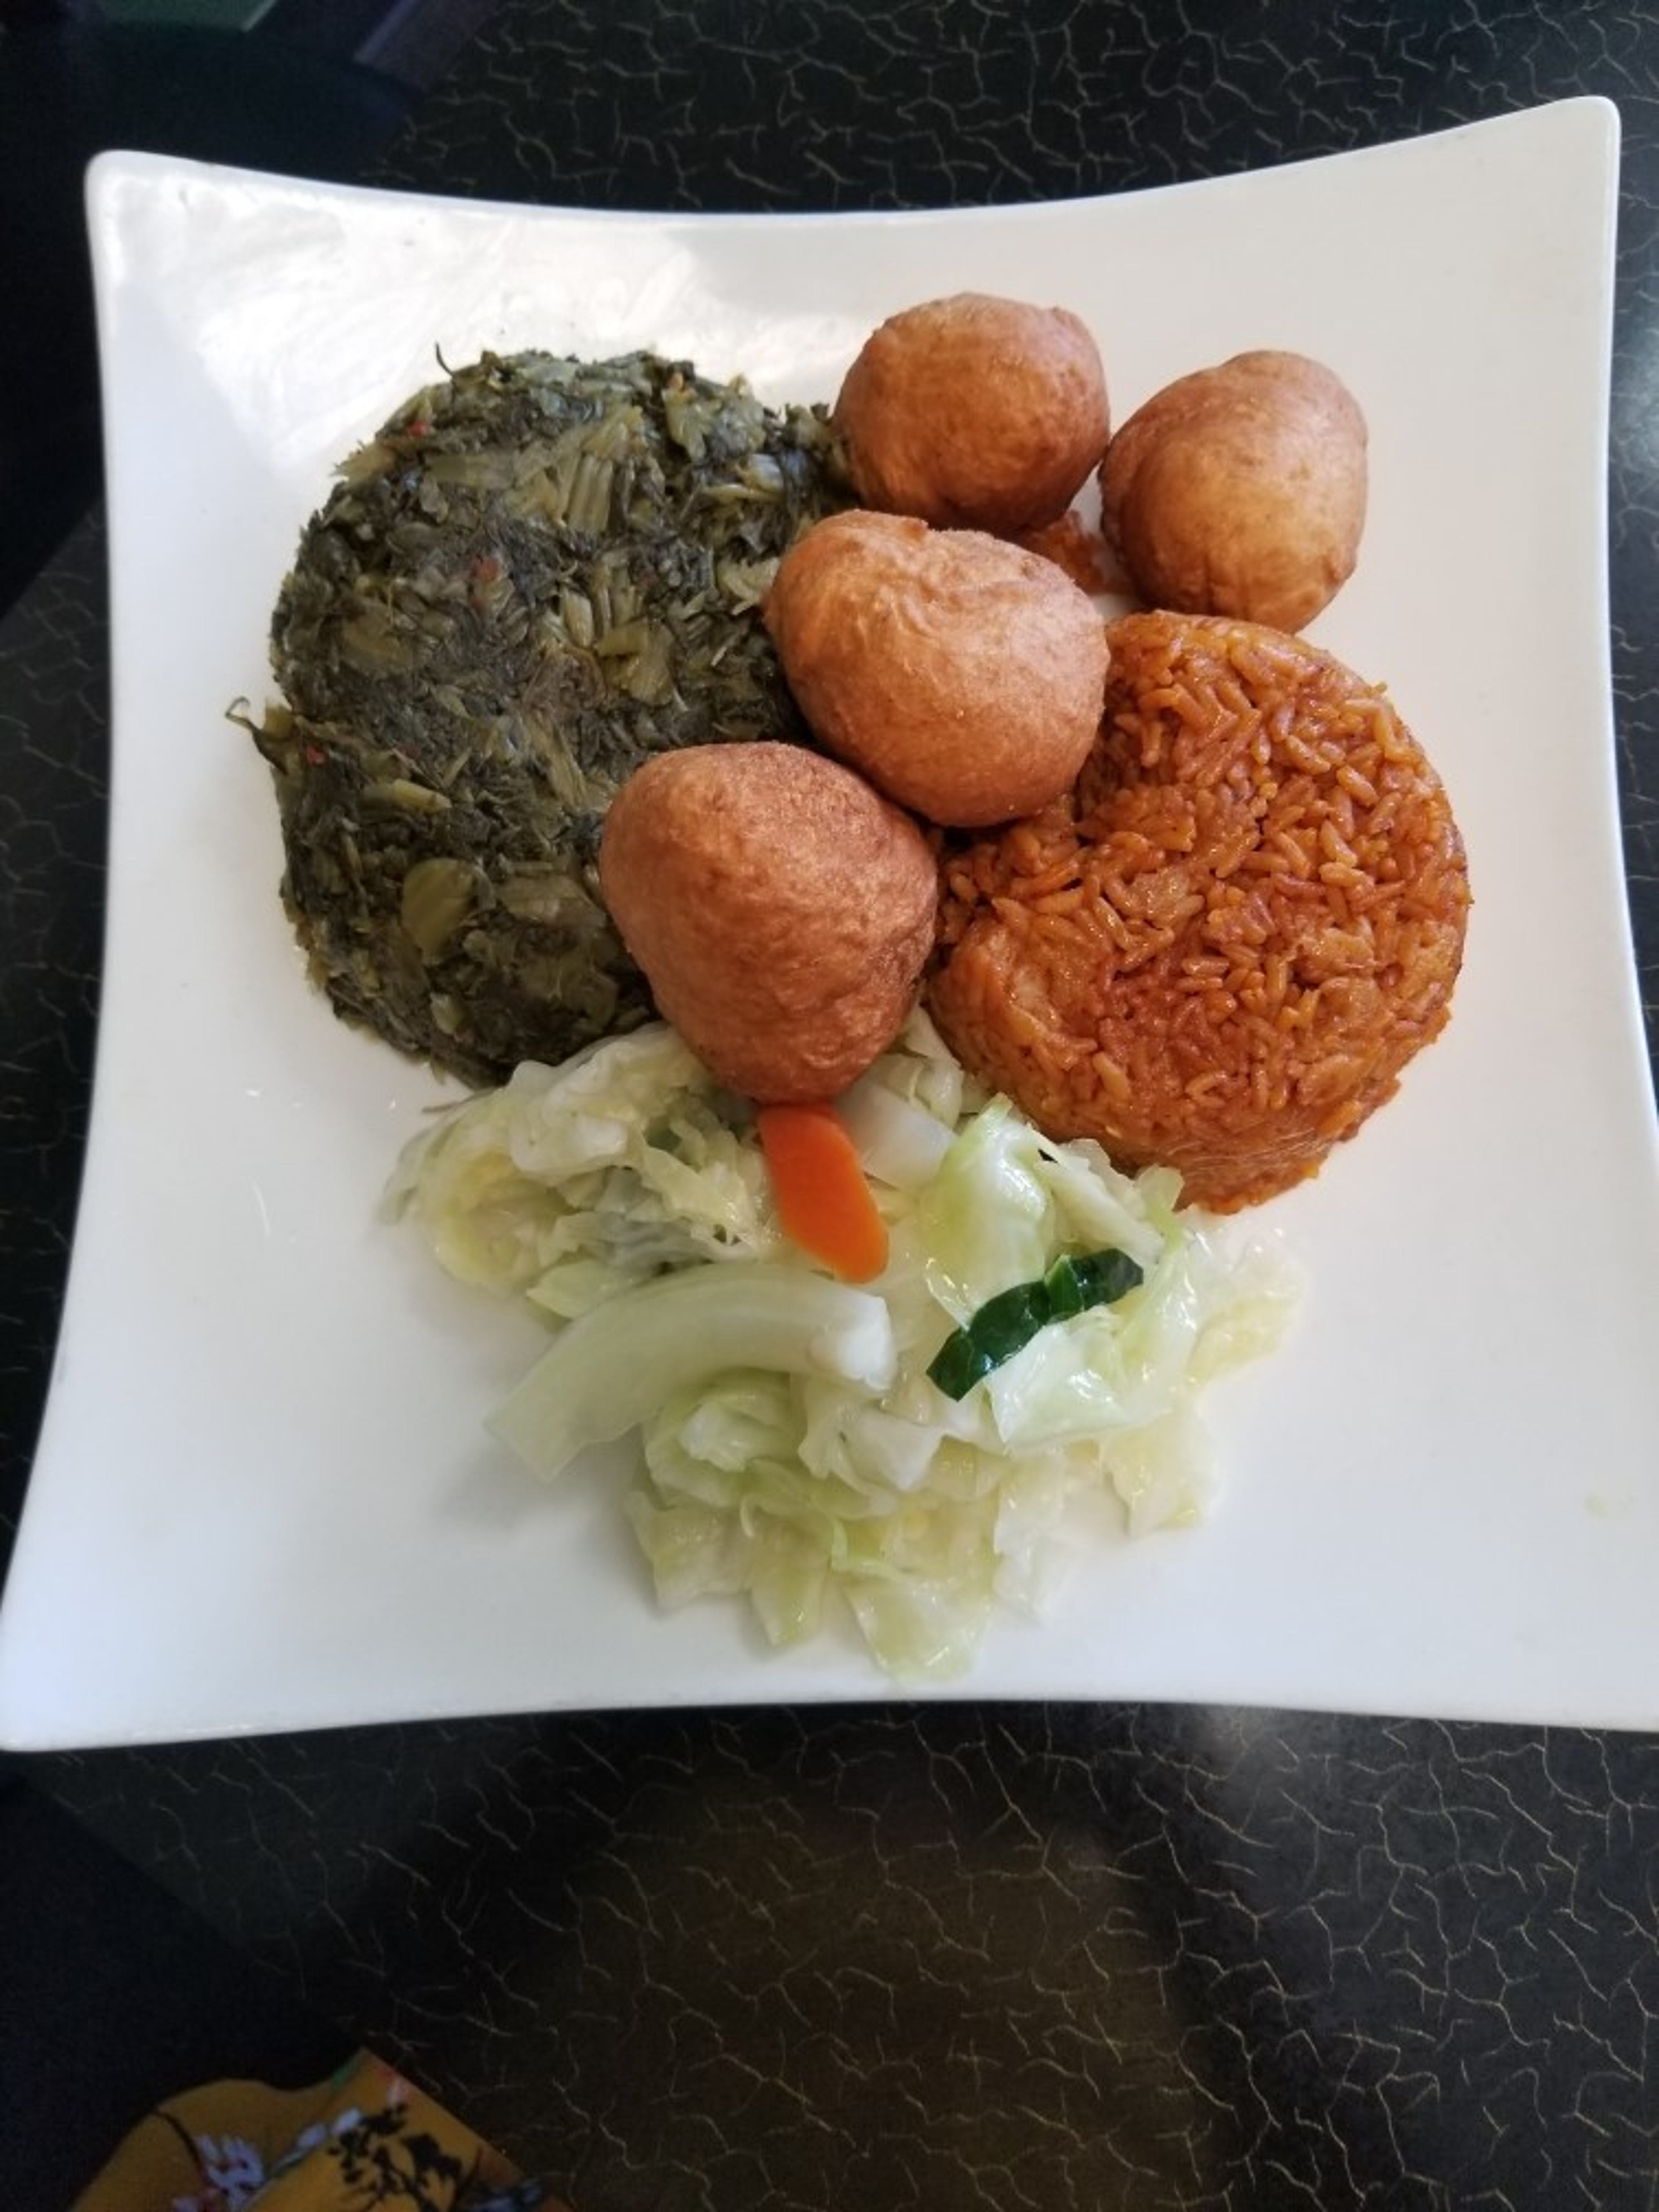 NJ restaurants: Where to taste the foods of the African diaspora